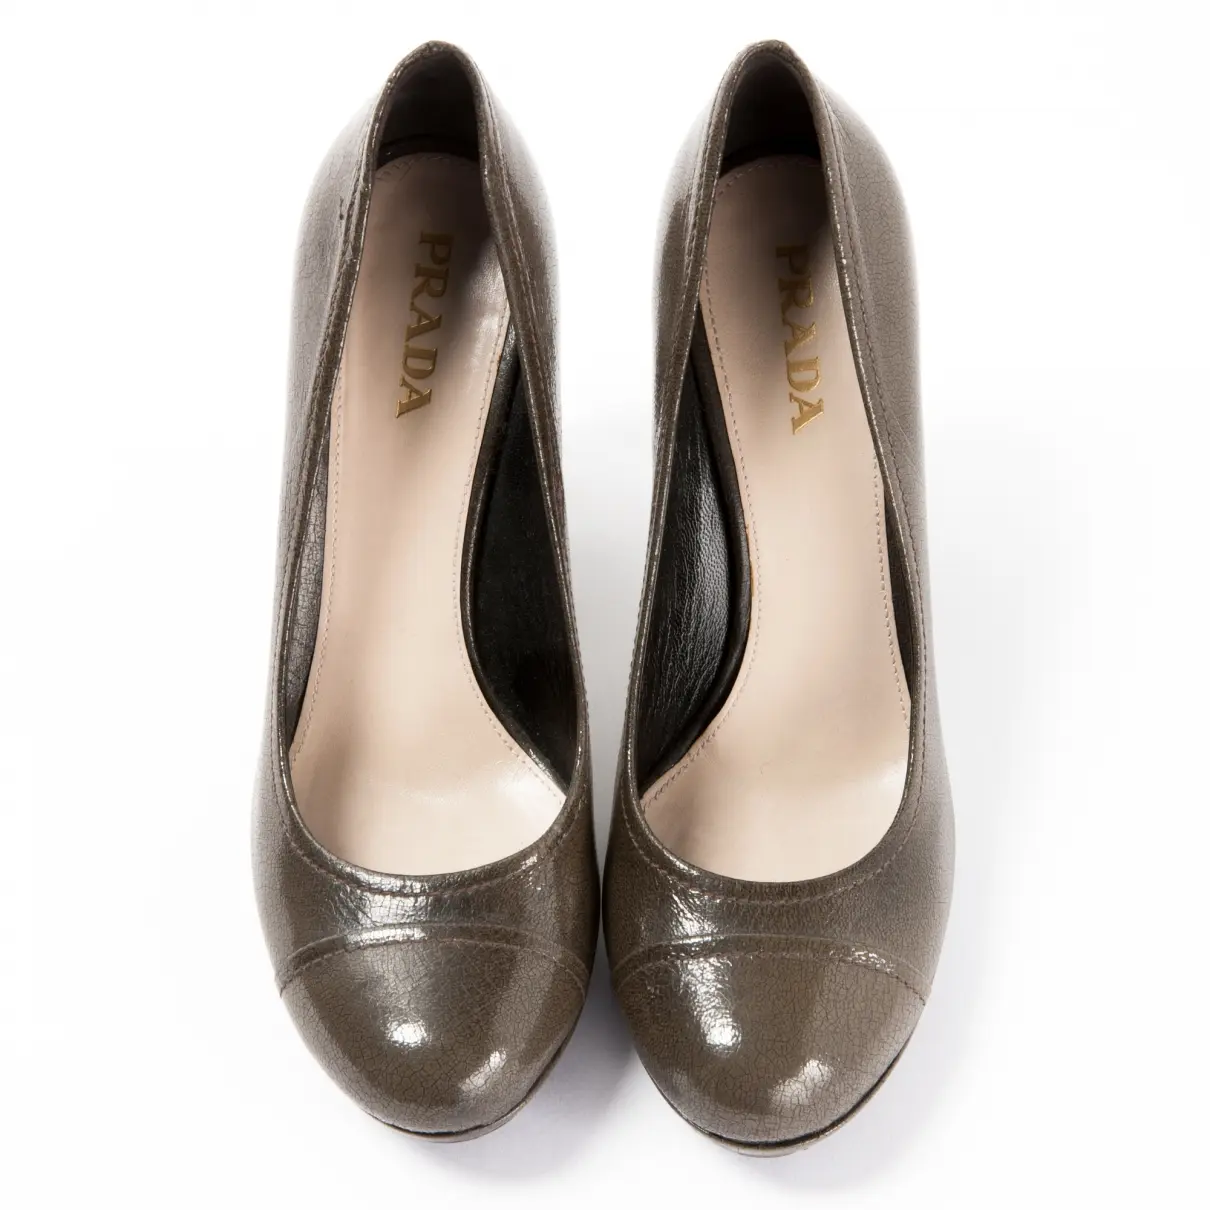 Buy Prada Patent leather heels online